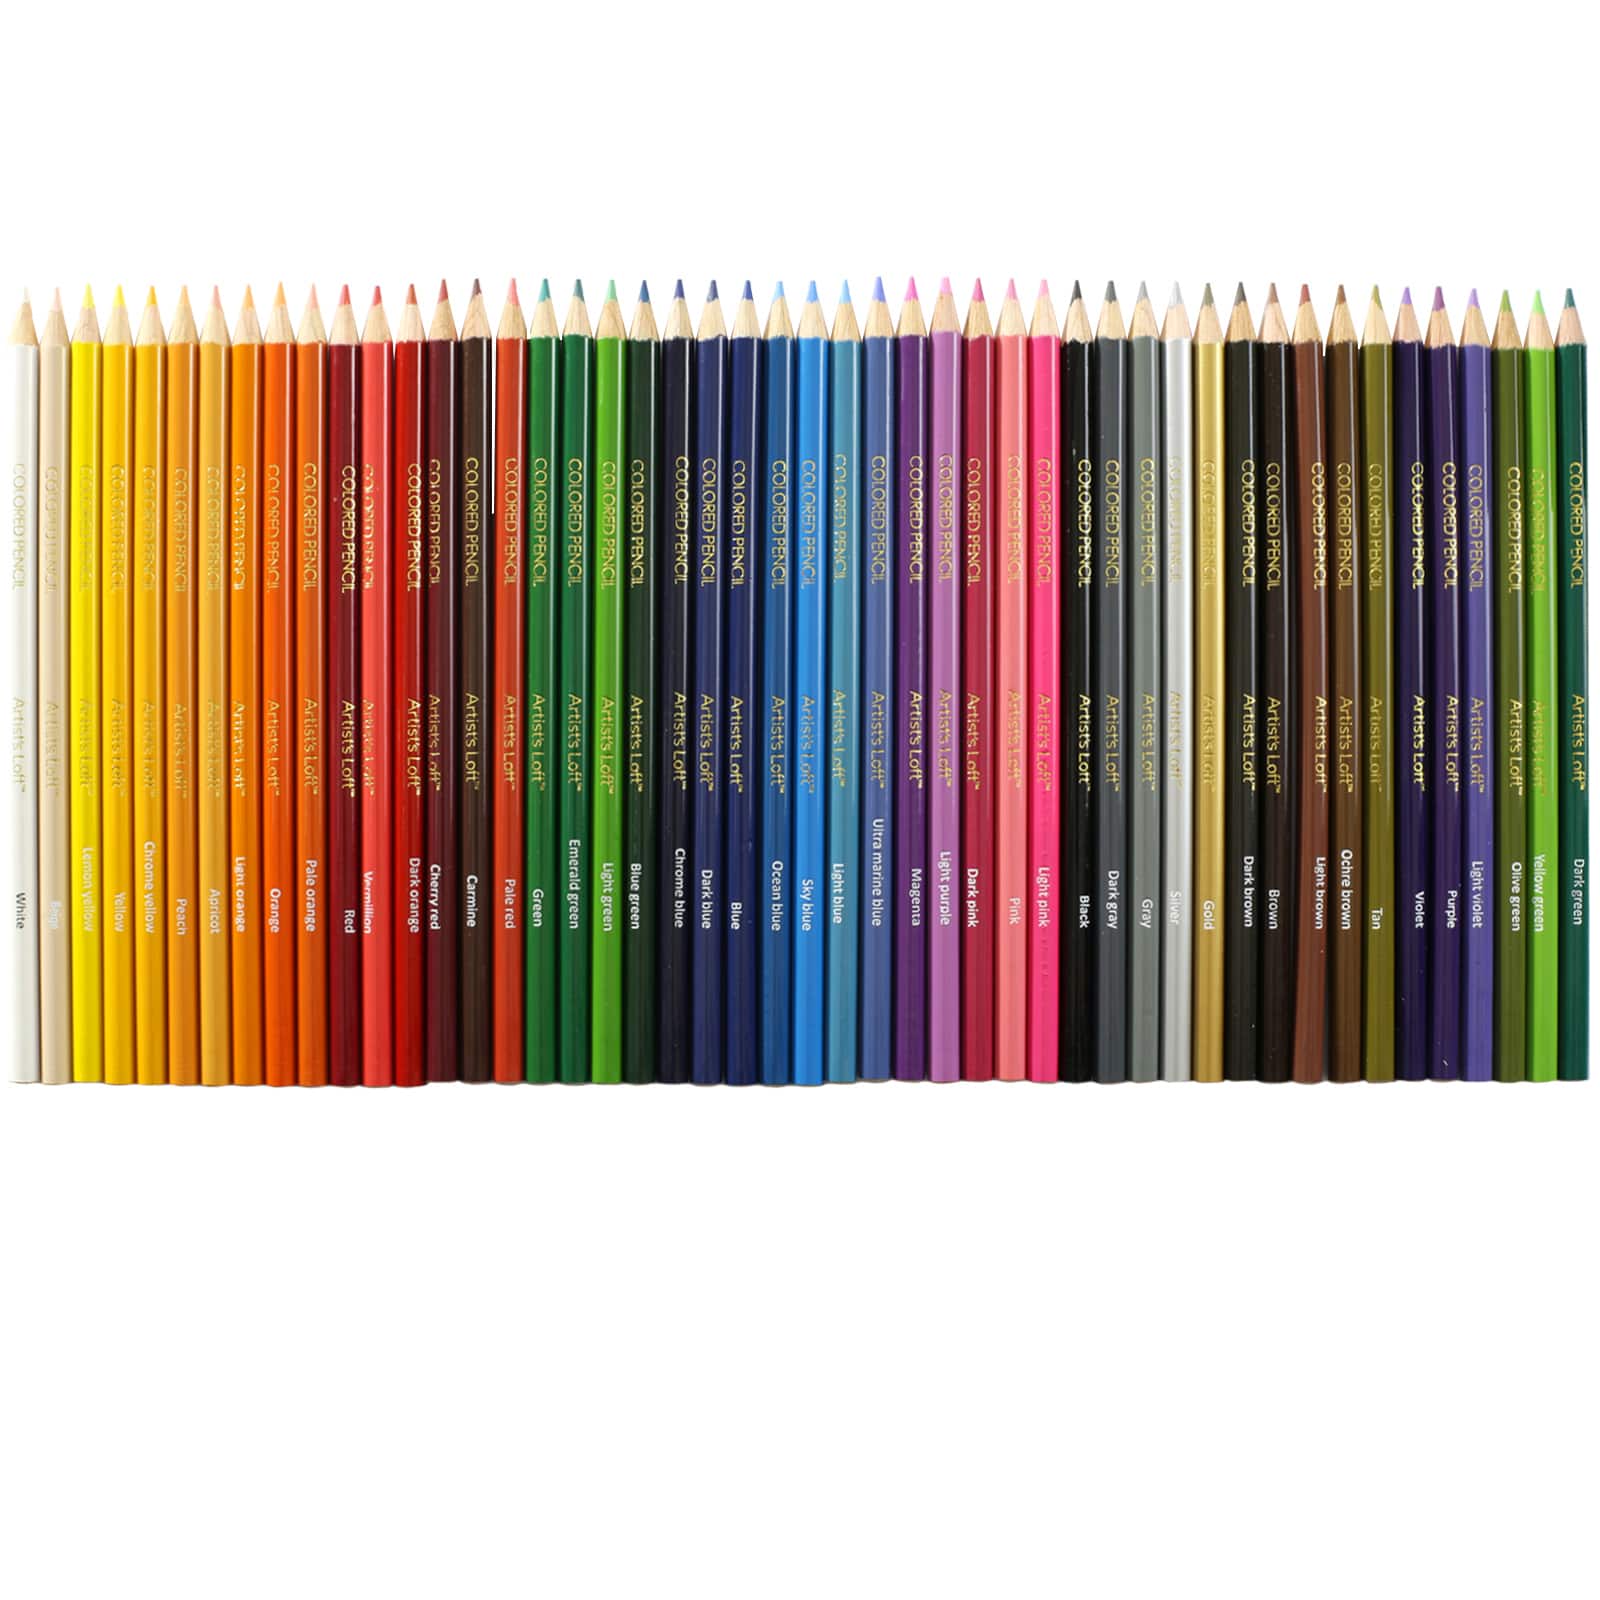 Fantasia Colored Pencil Set - Assorted Colors, Tin Box, Set of 48